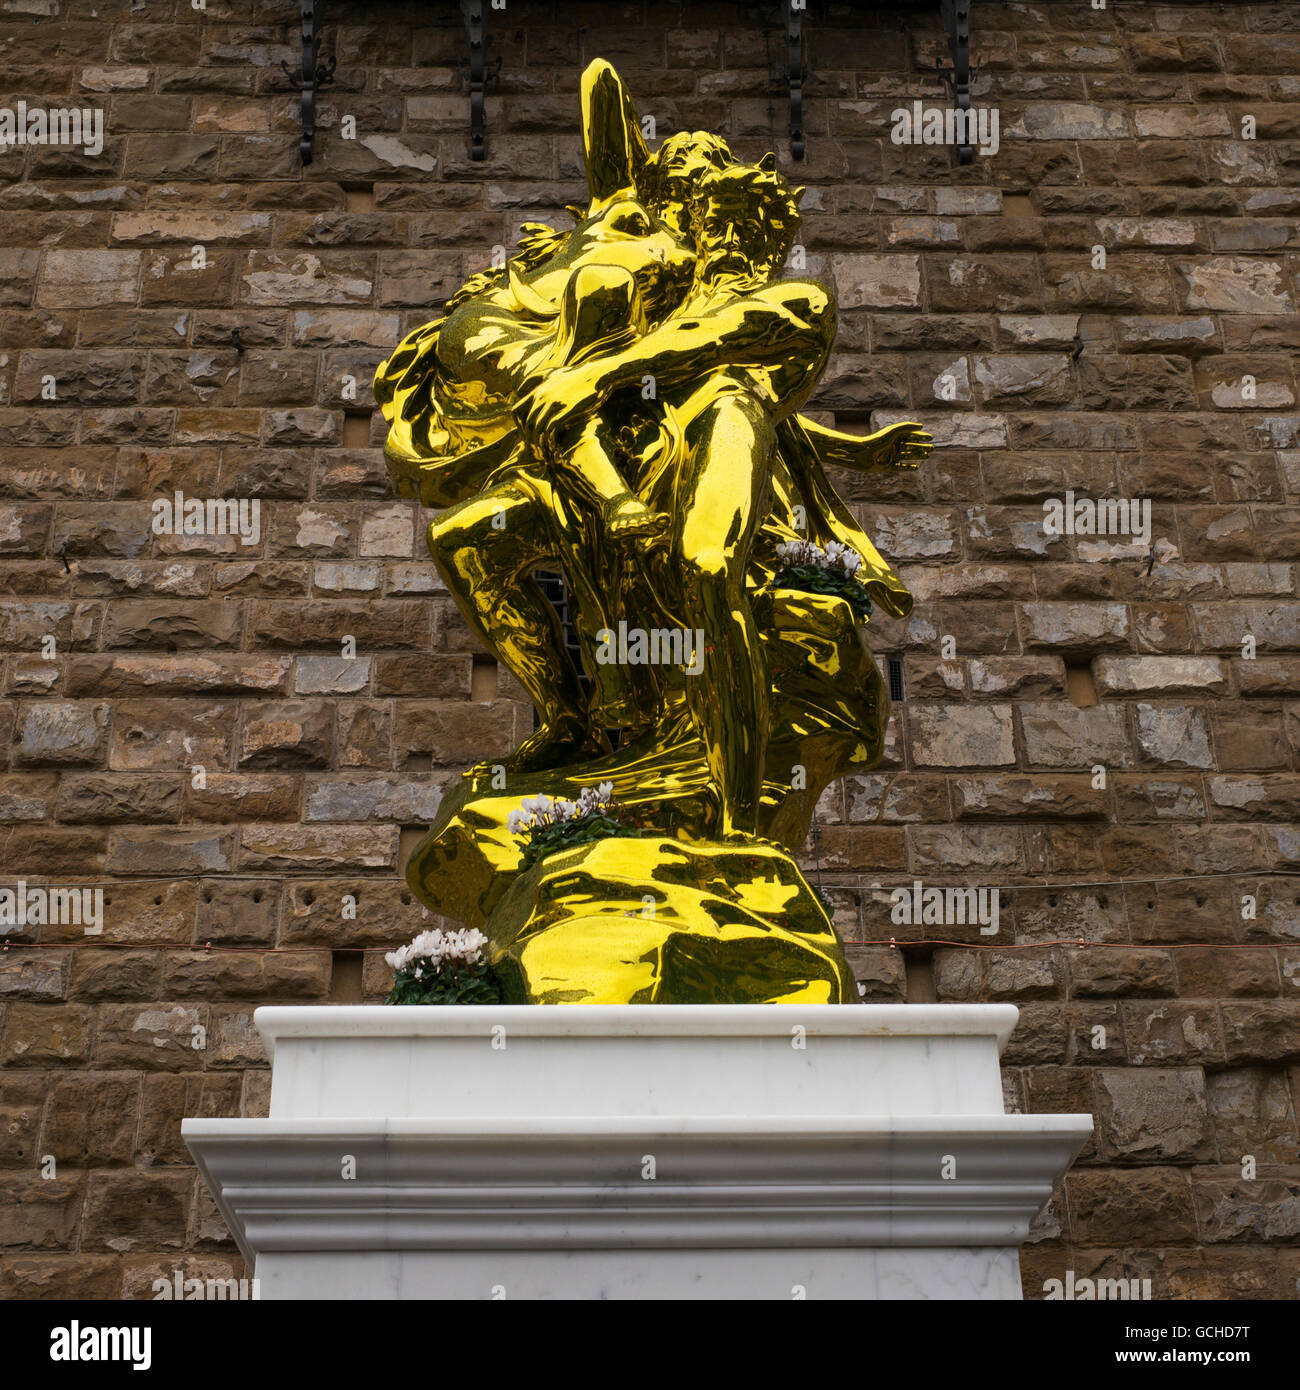 Gold statue against a stone wall in Piazza della Signoria; Florence, Italy Stock Photo